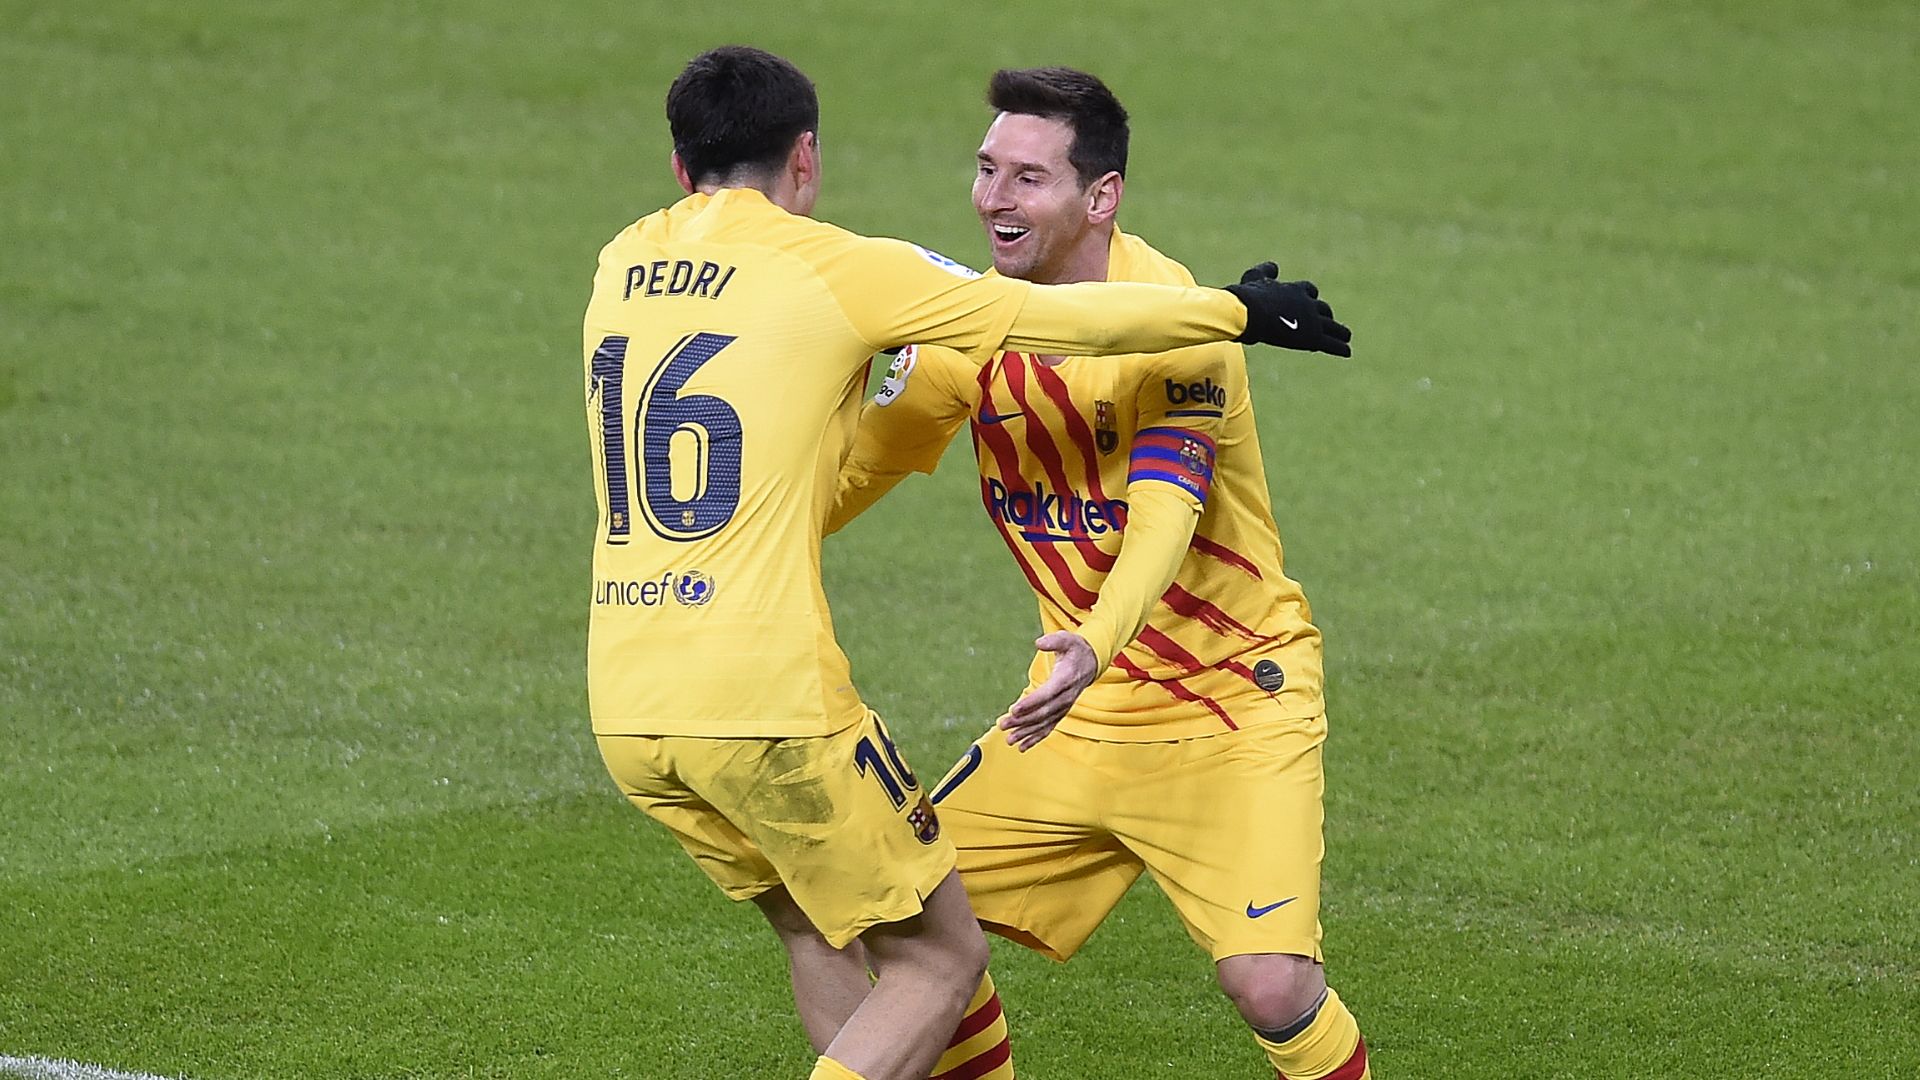 Messi & Pedri partnership delights Koeman after crucial Barca win News 24